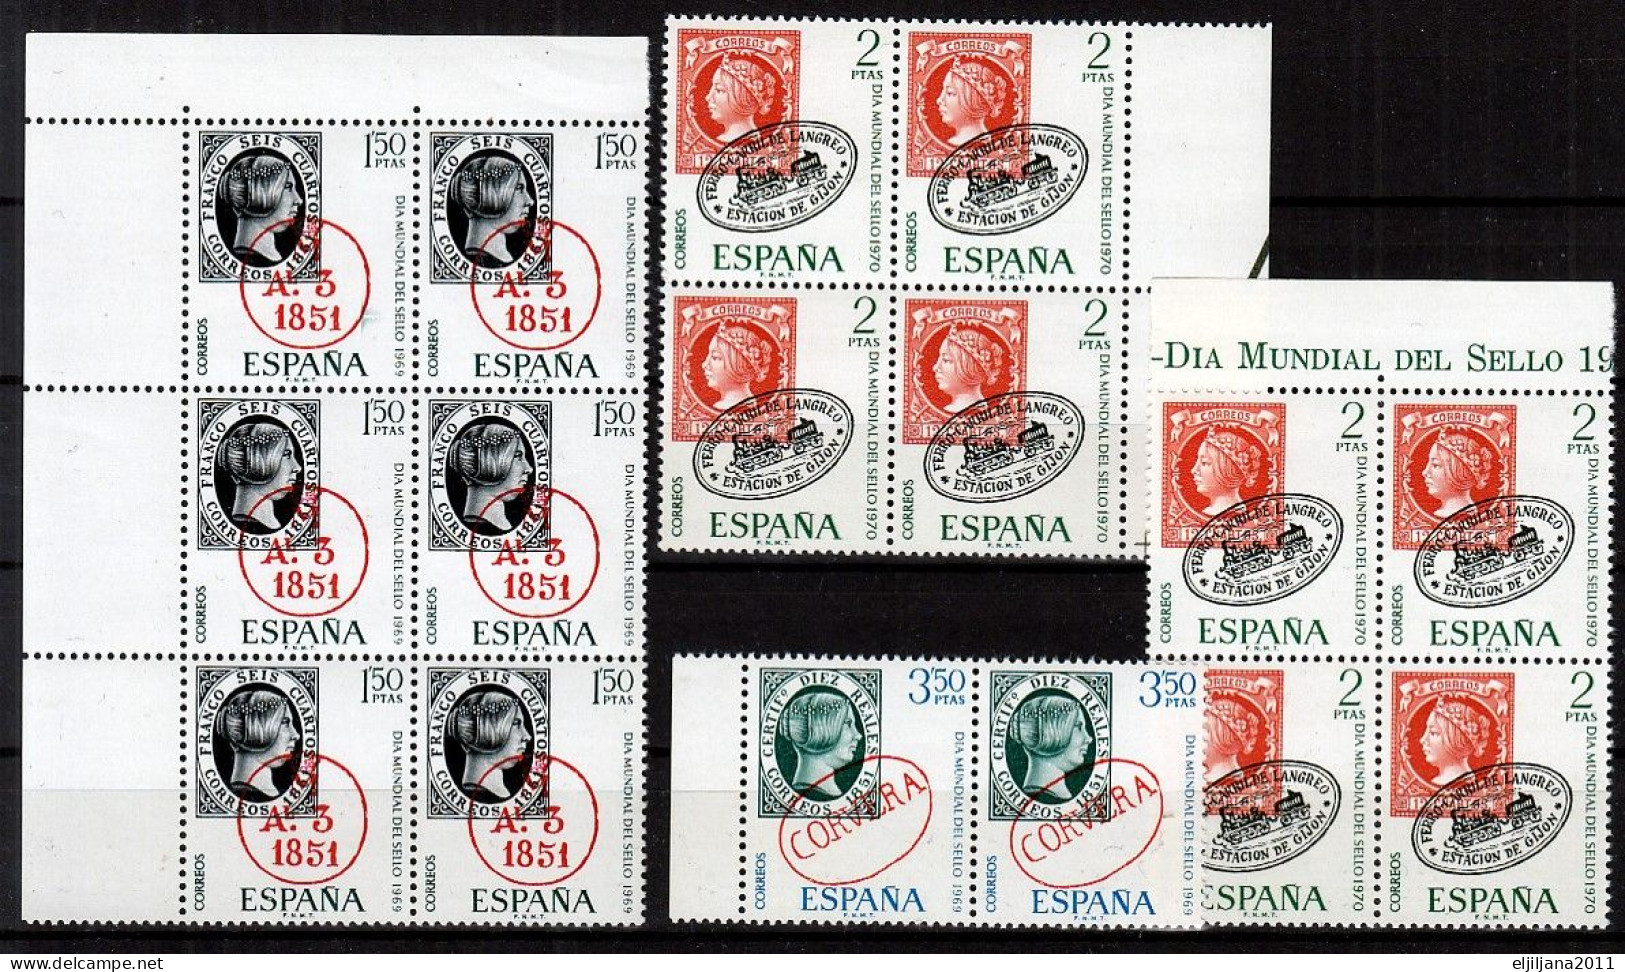 ⁕ SPAIN / ESPANA 1969 - 1970 ⁕ World Stamp Day Mi.1809/10 & Mi.1861 ⁕ 16v MNH - Neufs